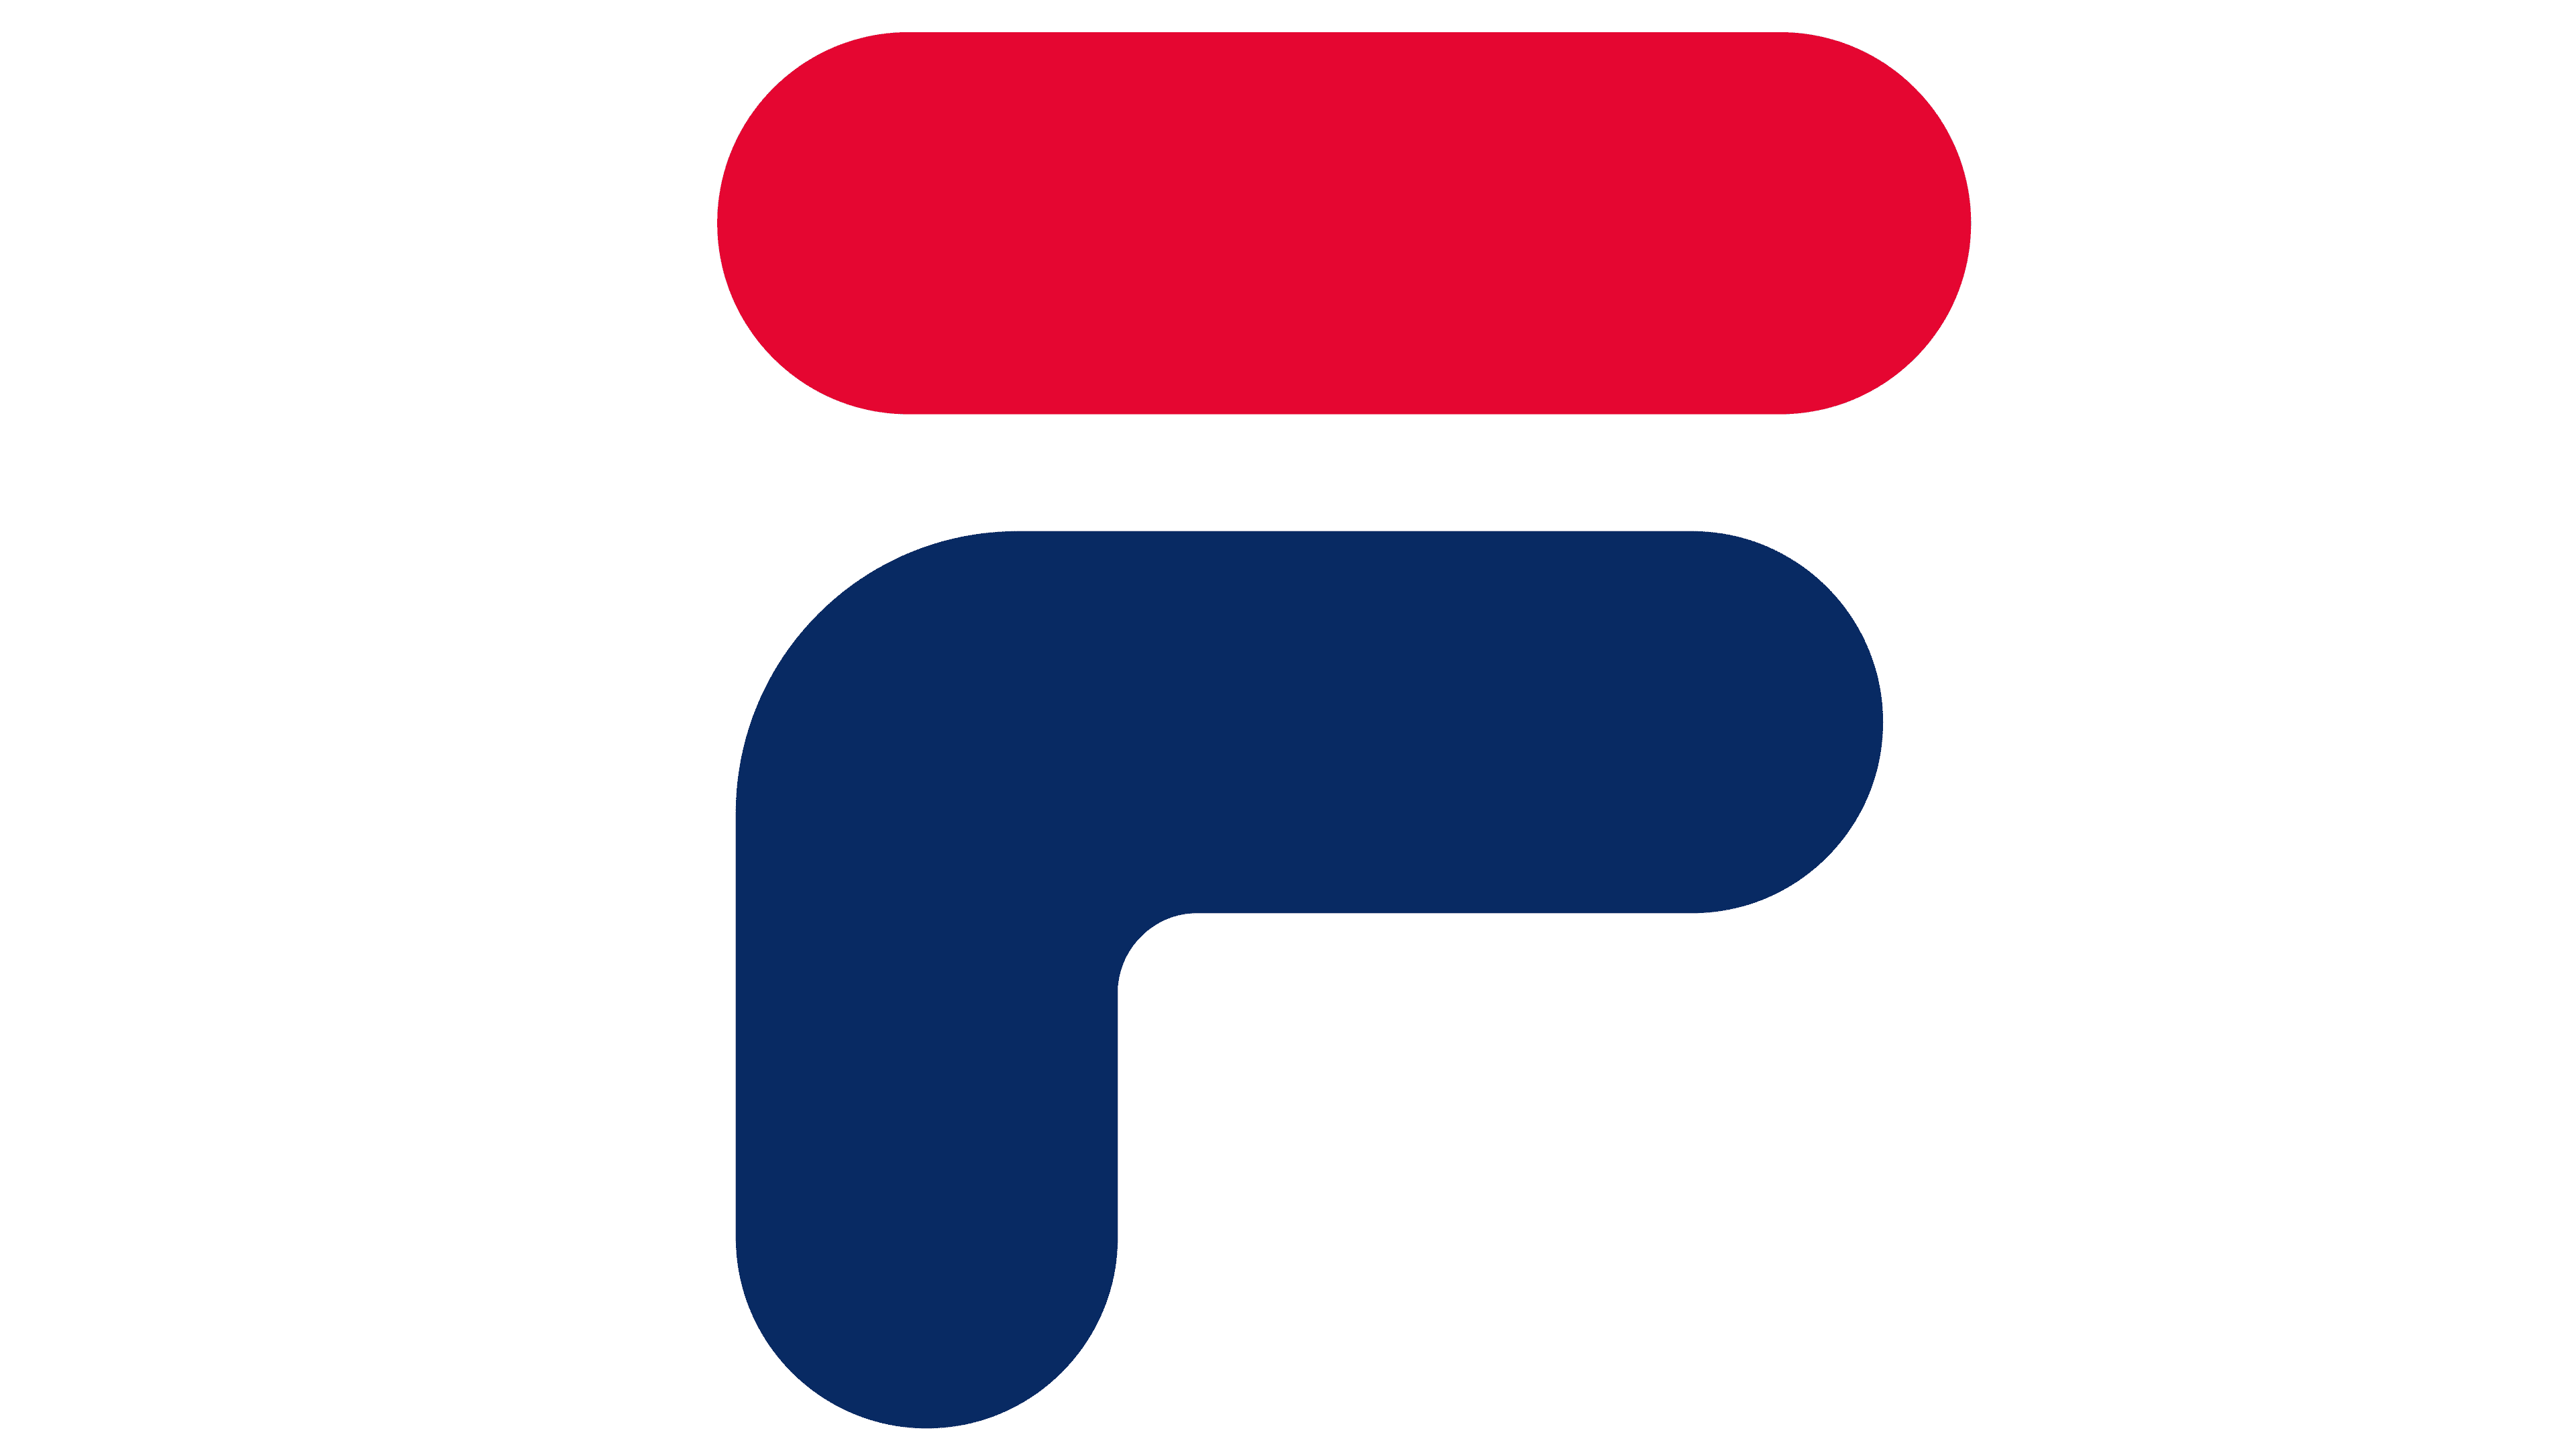 Roux taburete Antecedente Fila Logo, symbol, meaning, history, PNG, brand